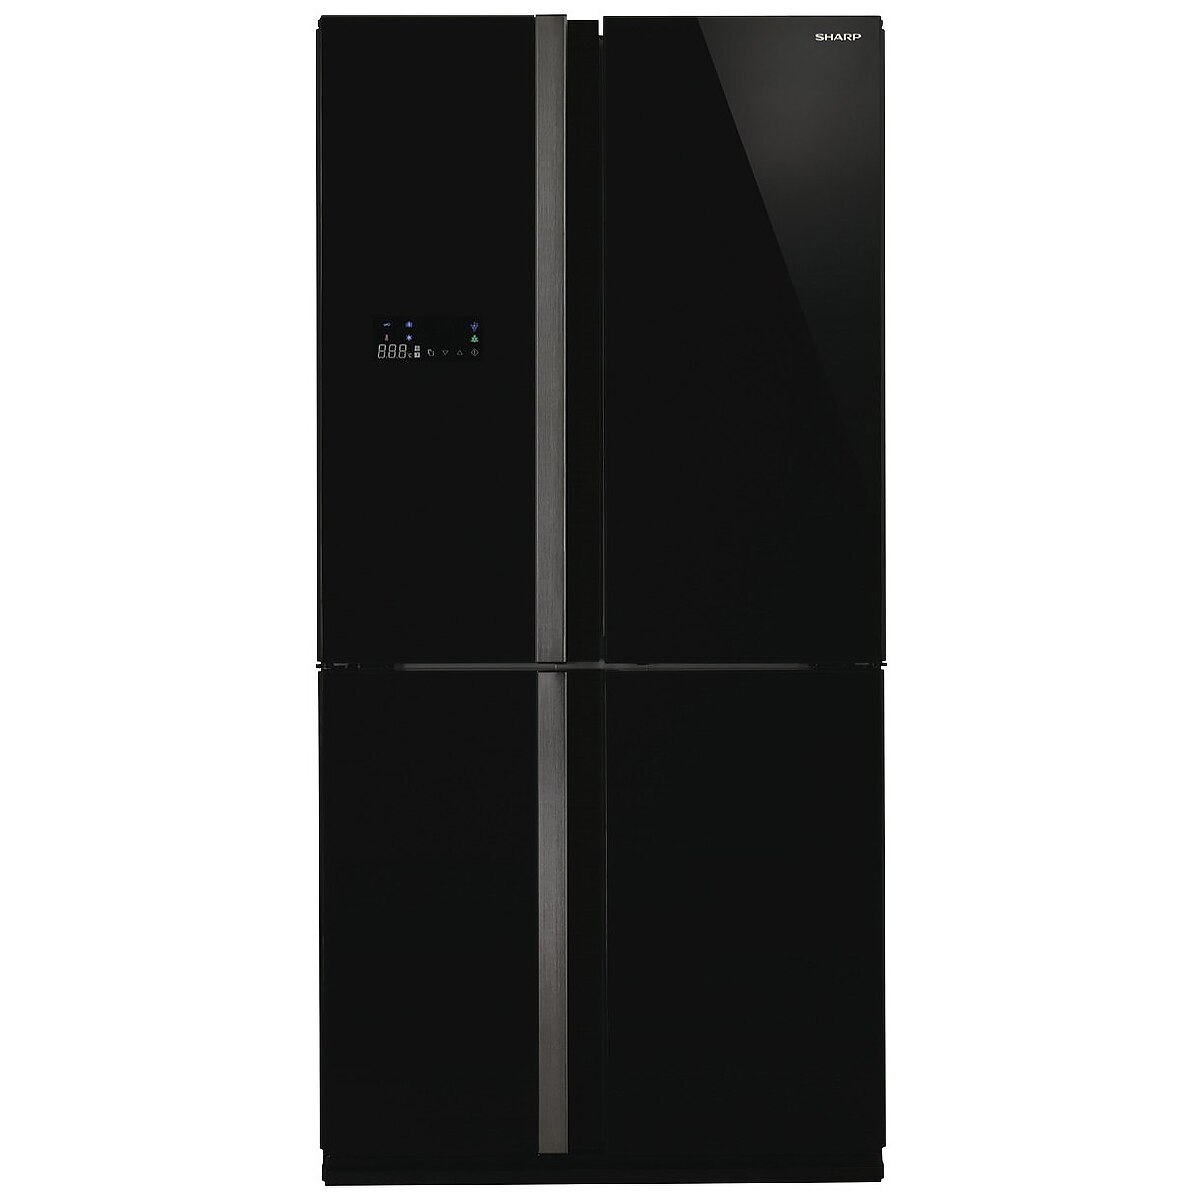 SHARP Tall fridge SJFJ676VBK (Glass Black) French 4 door